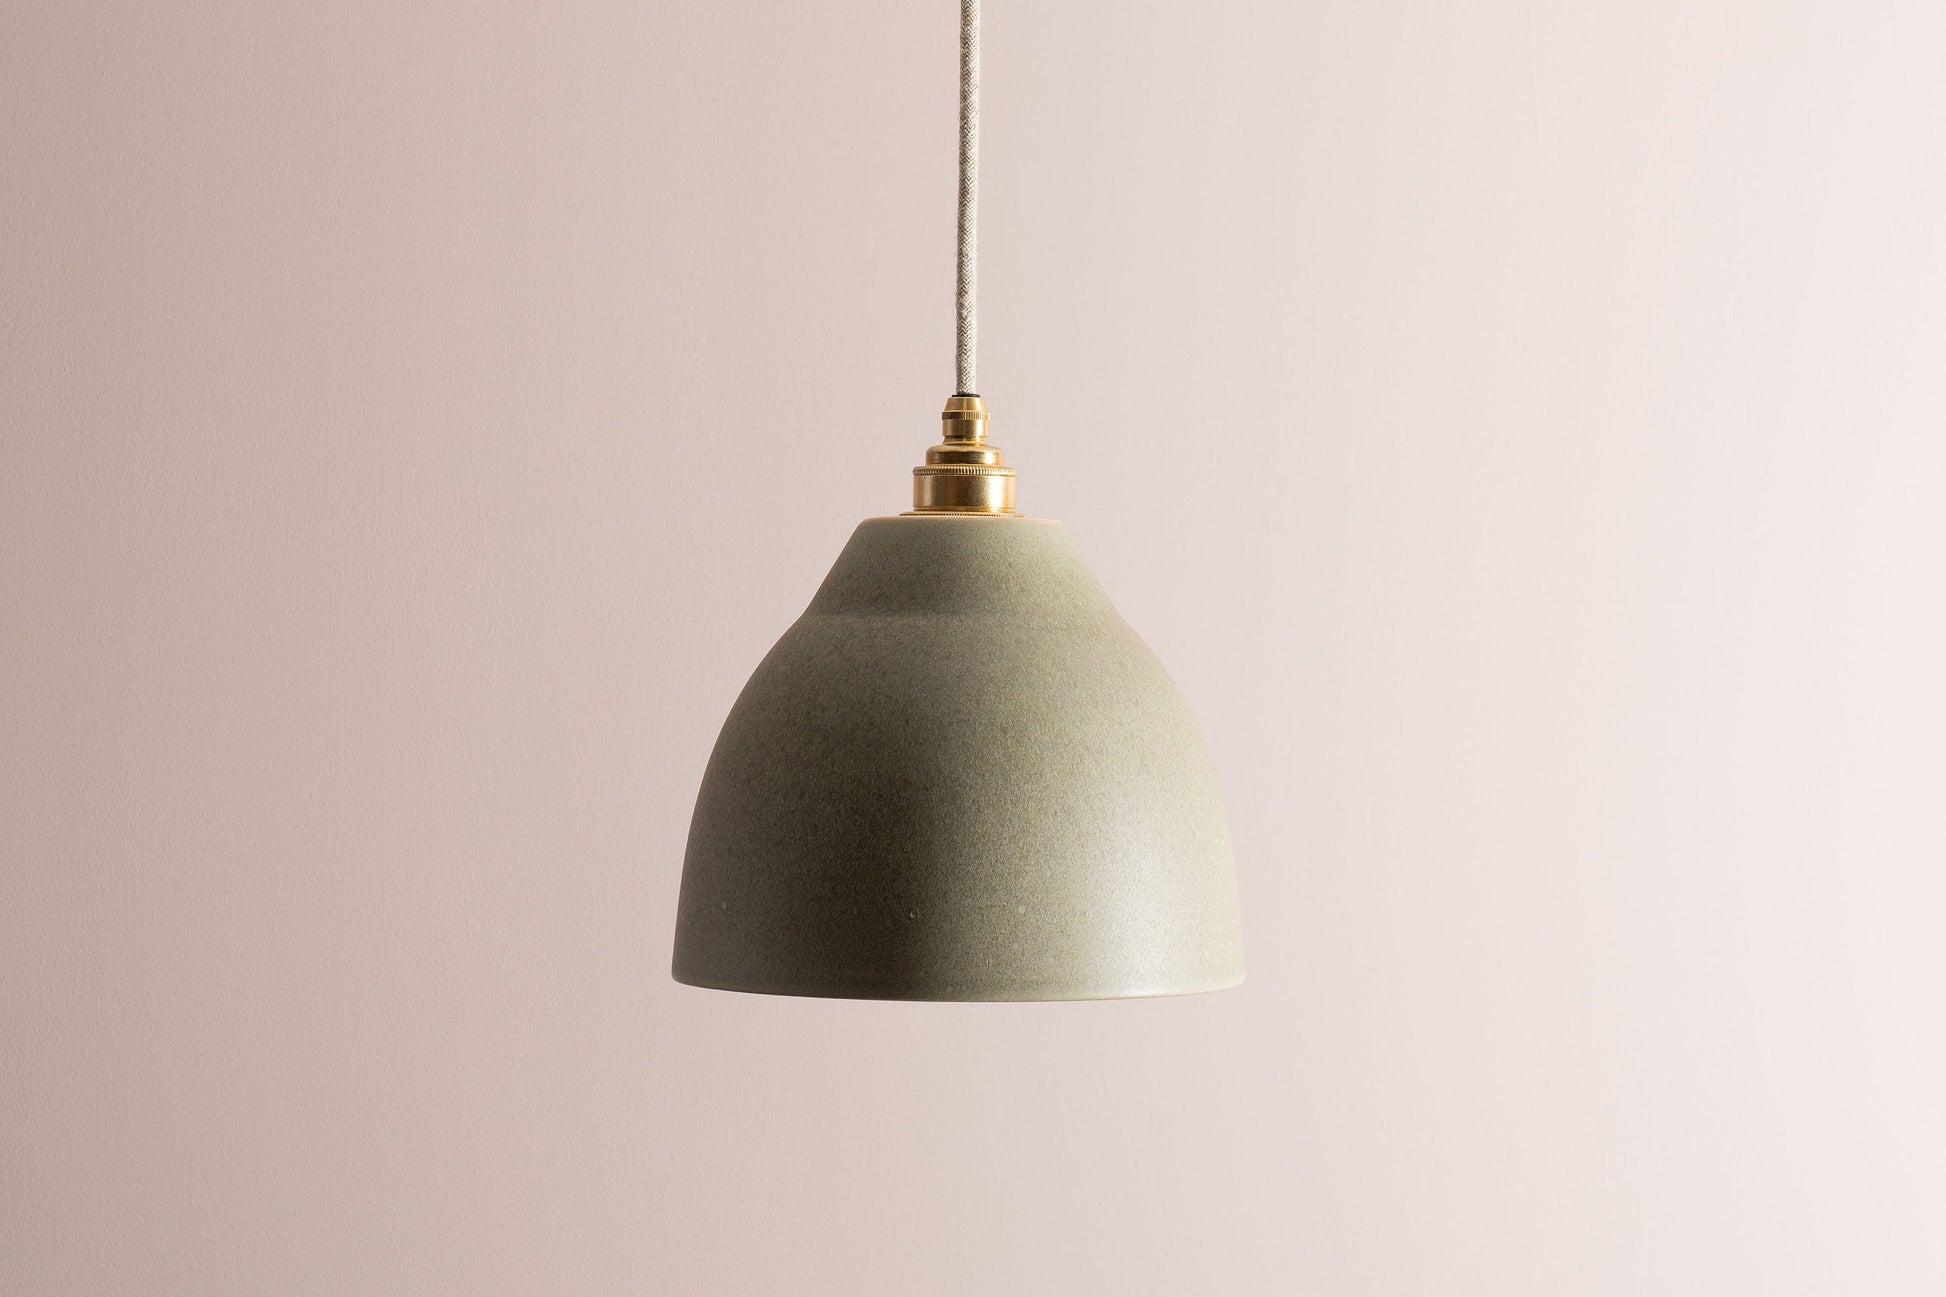 Green Element Pendant Light in Ceramic and Brass/Nickel by StudioHaran